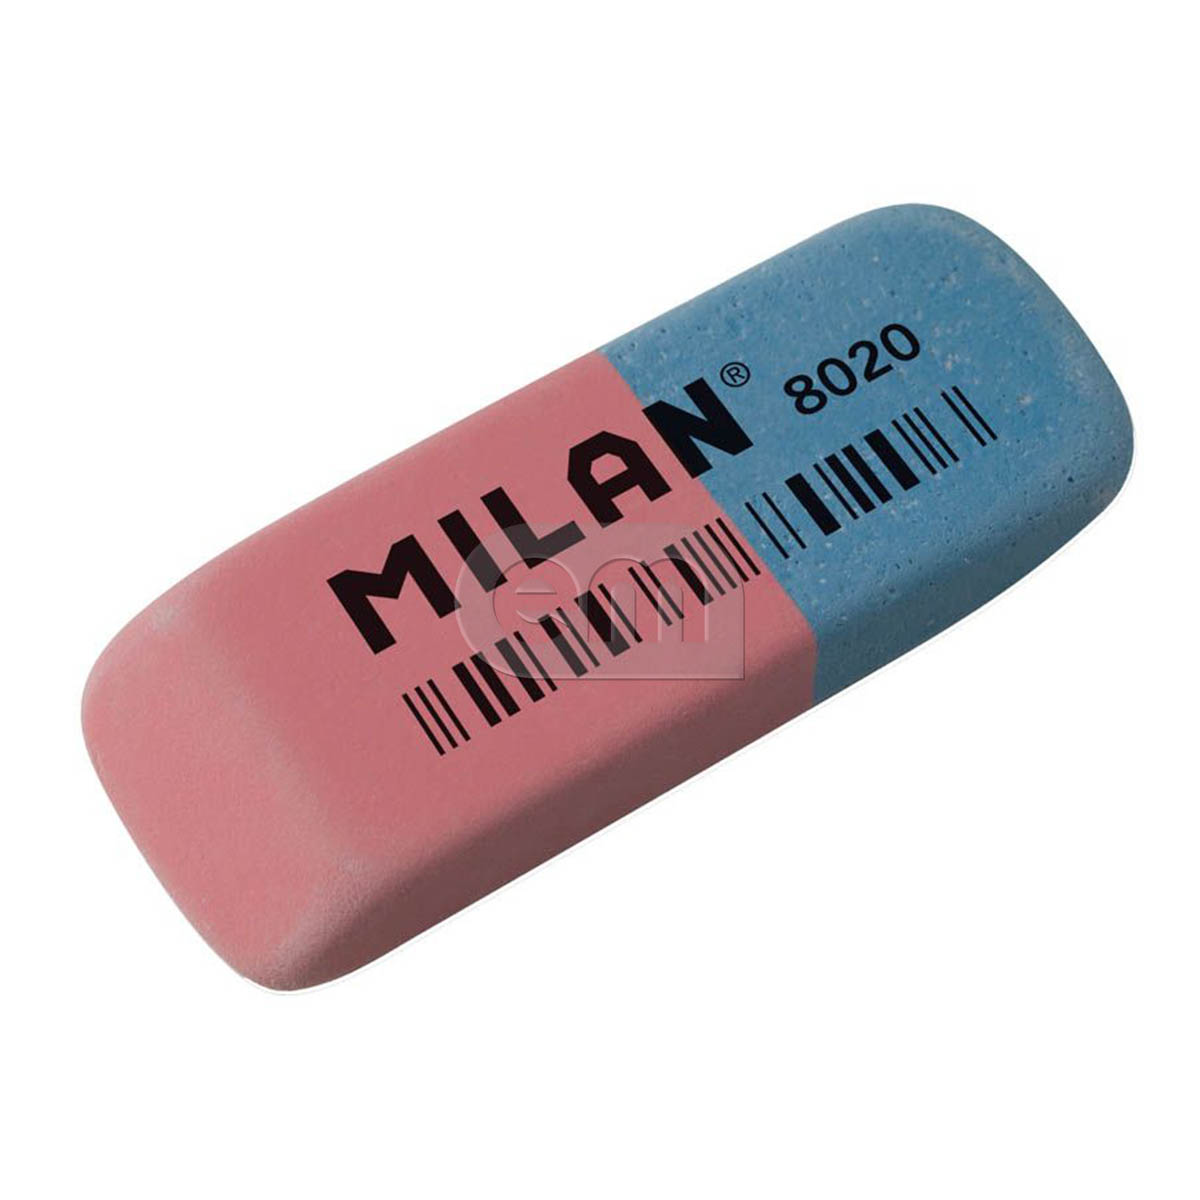 Ластик Milan 8020 каучуковый